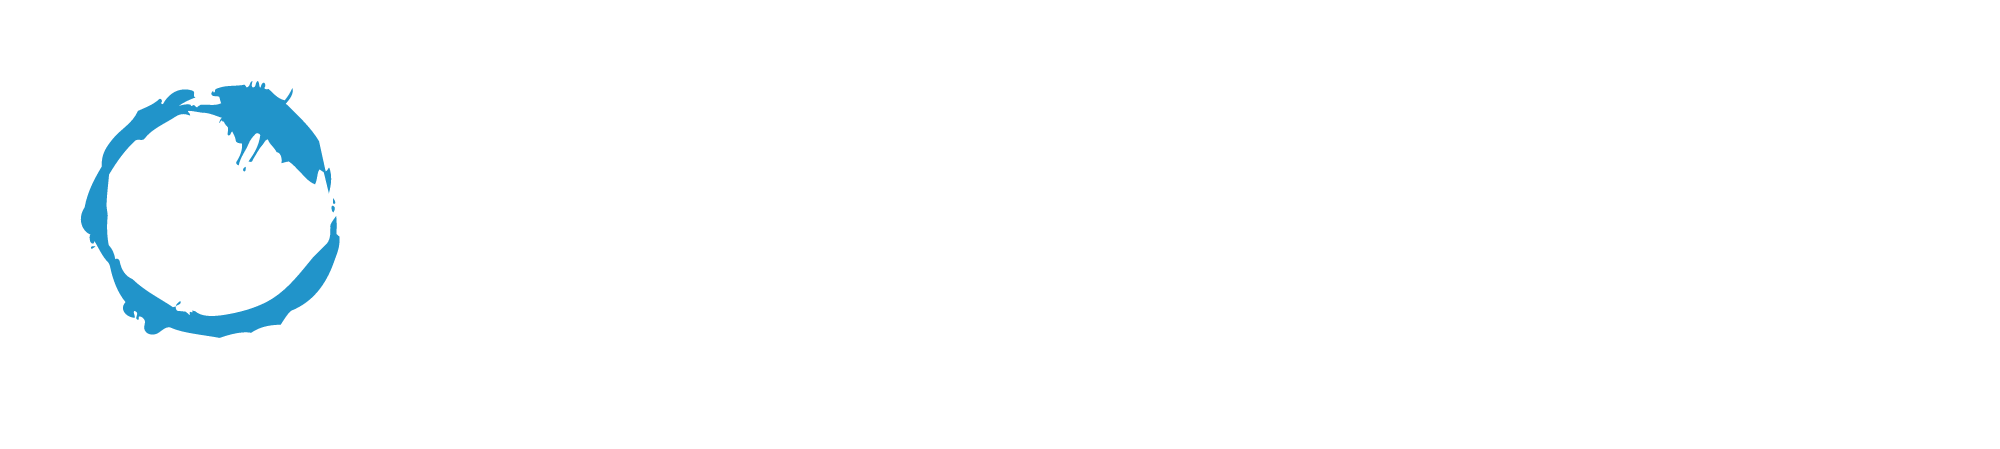 Whole Arts Voice Studio